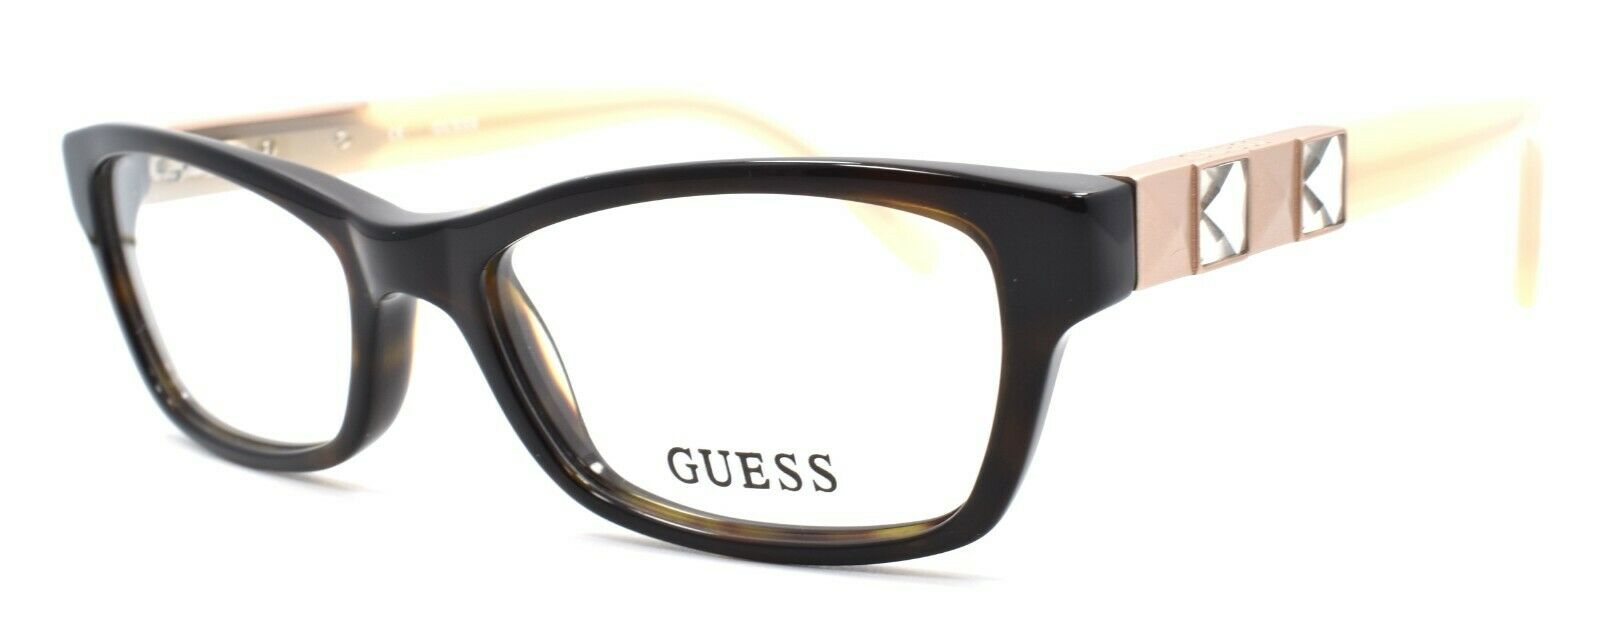 1-GUESS GU2414 TO Women's Eyeglasses Frames 50-16-135 Tortoise w/ Crystals + CASE-715583996380-IKSpecs